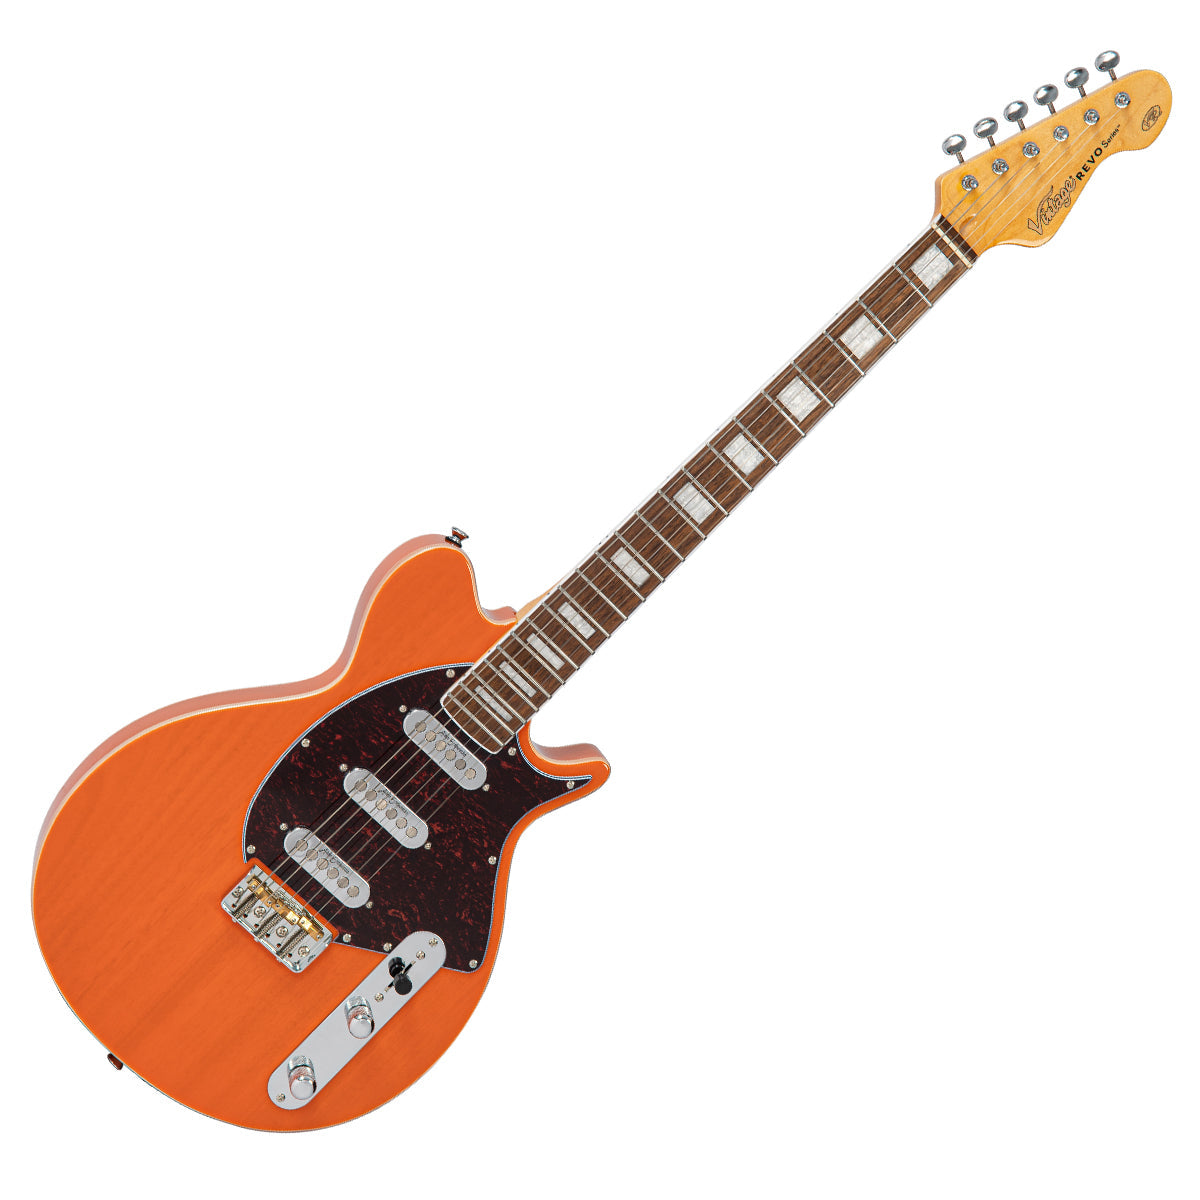 Vintage REVO Series 'Vision' Electric Guitar ~ Trans Orange, Electric Guitars for sale at Richards Guitars.